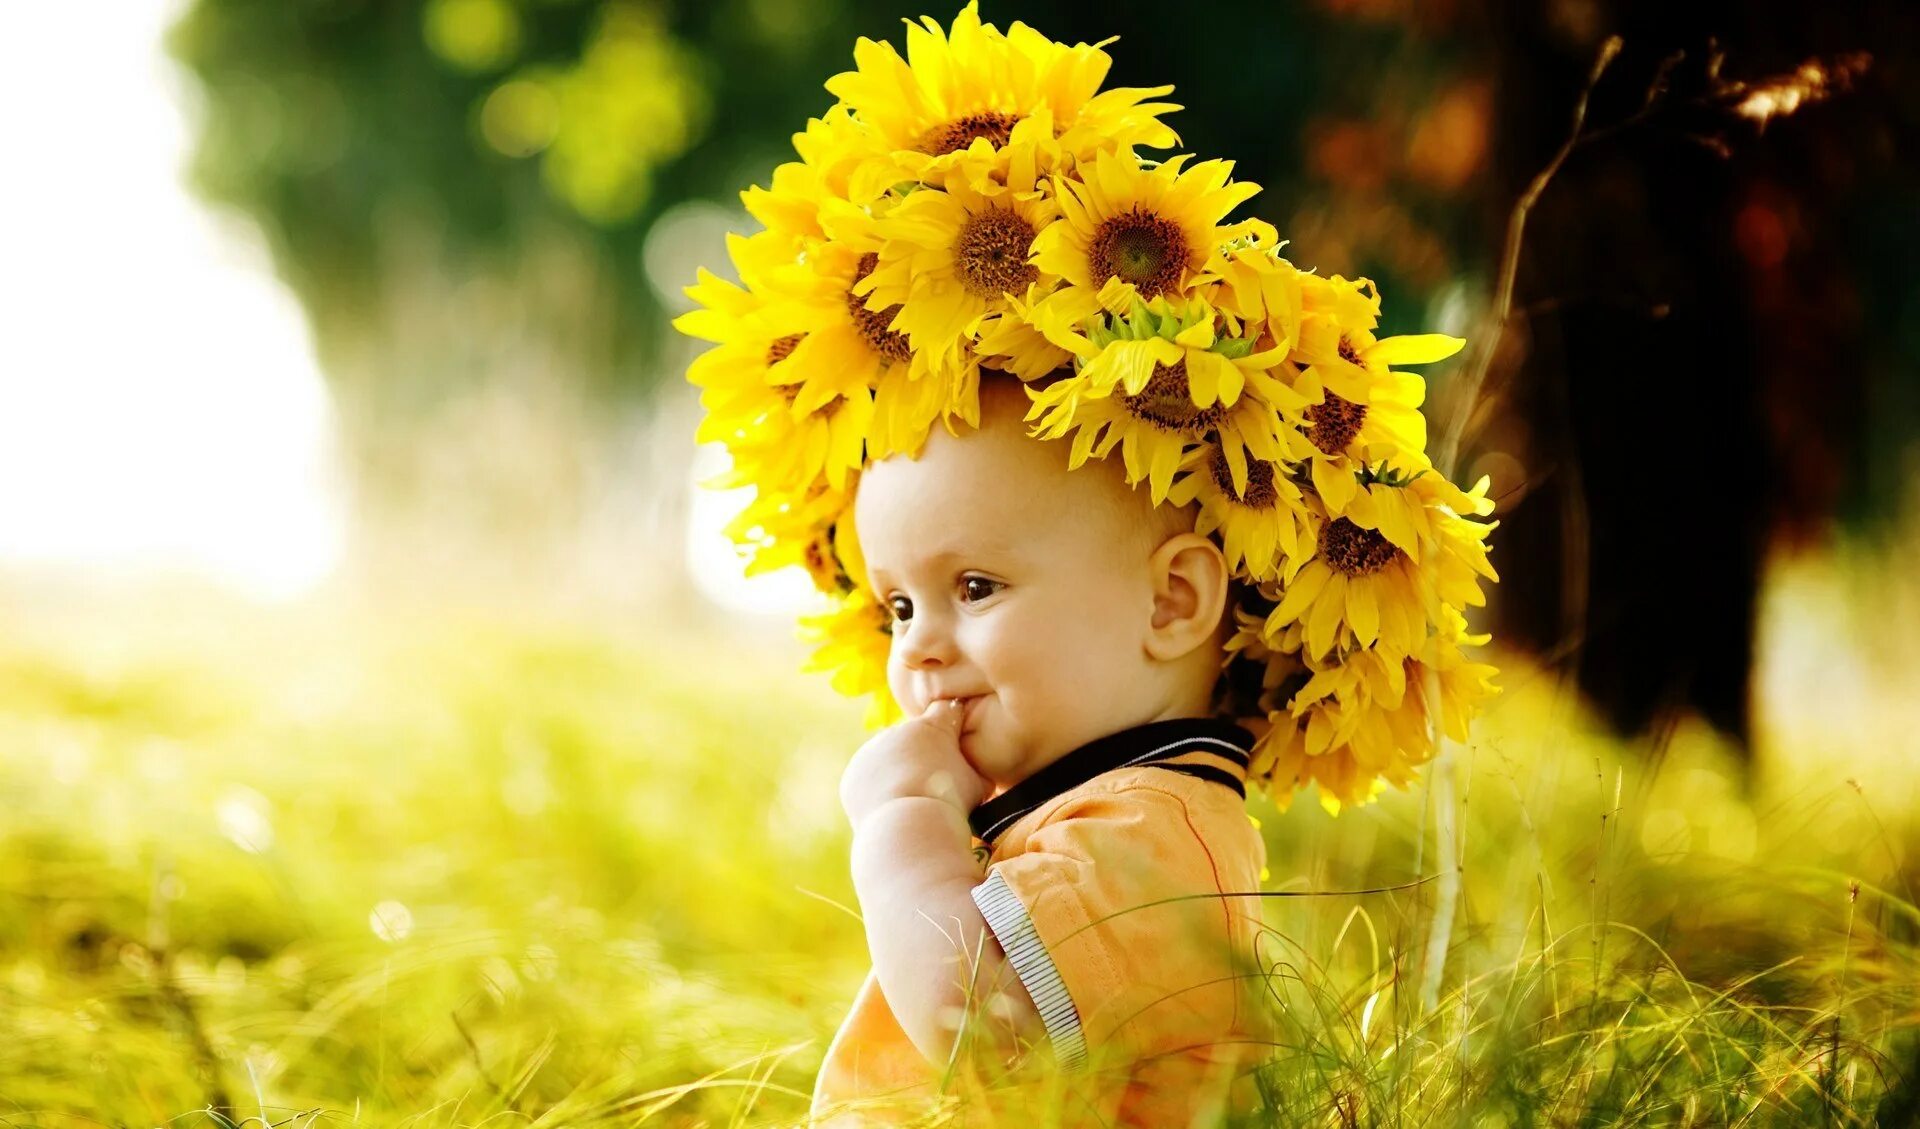 Цвет в жизни ребенка. Дети с цветами. Дети солнца. Дети цветы жизни. Солнце дети радость.